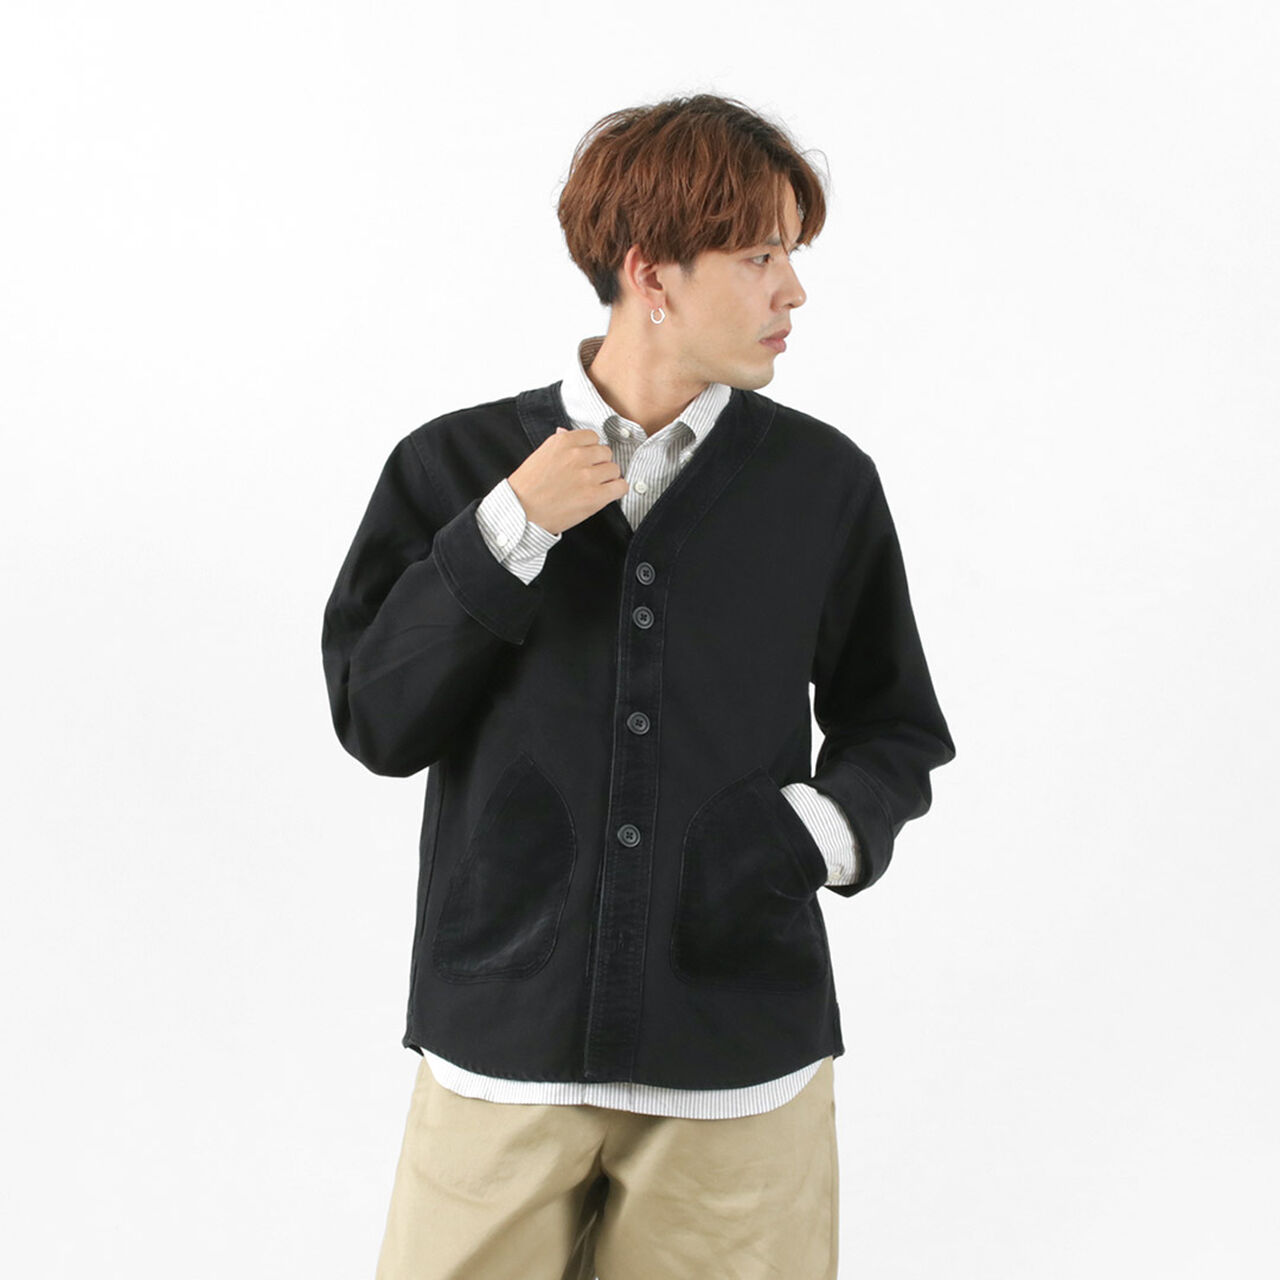 Katsuragi baseball cardigan,Black, large image number 0